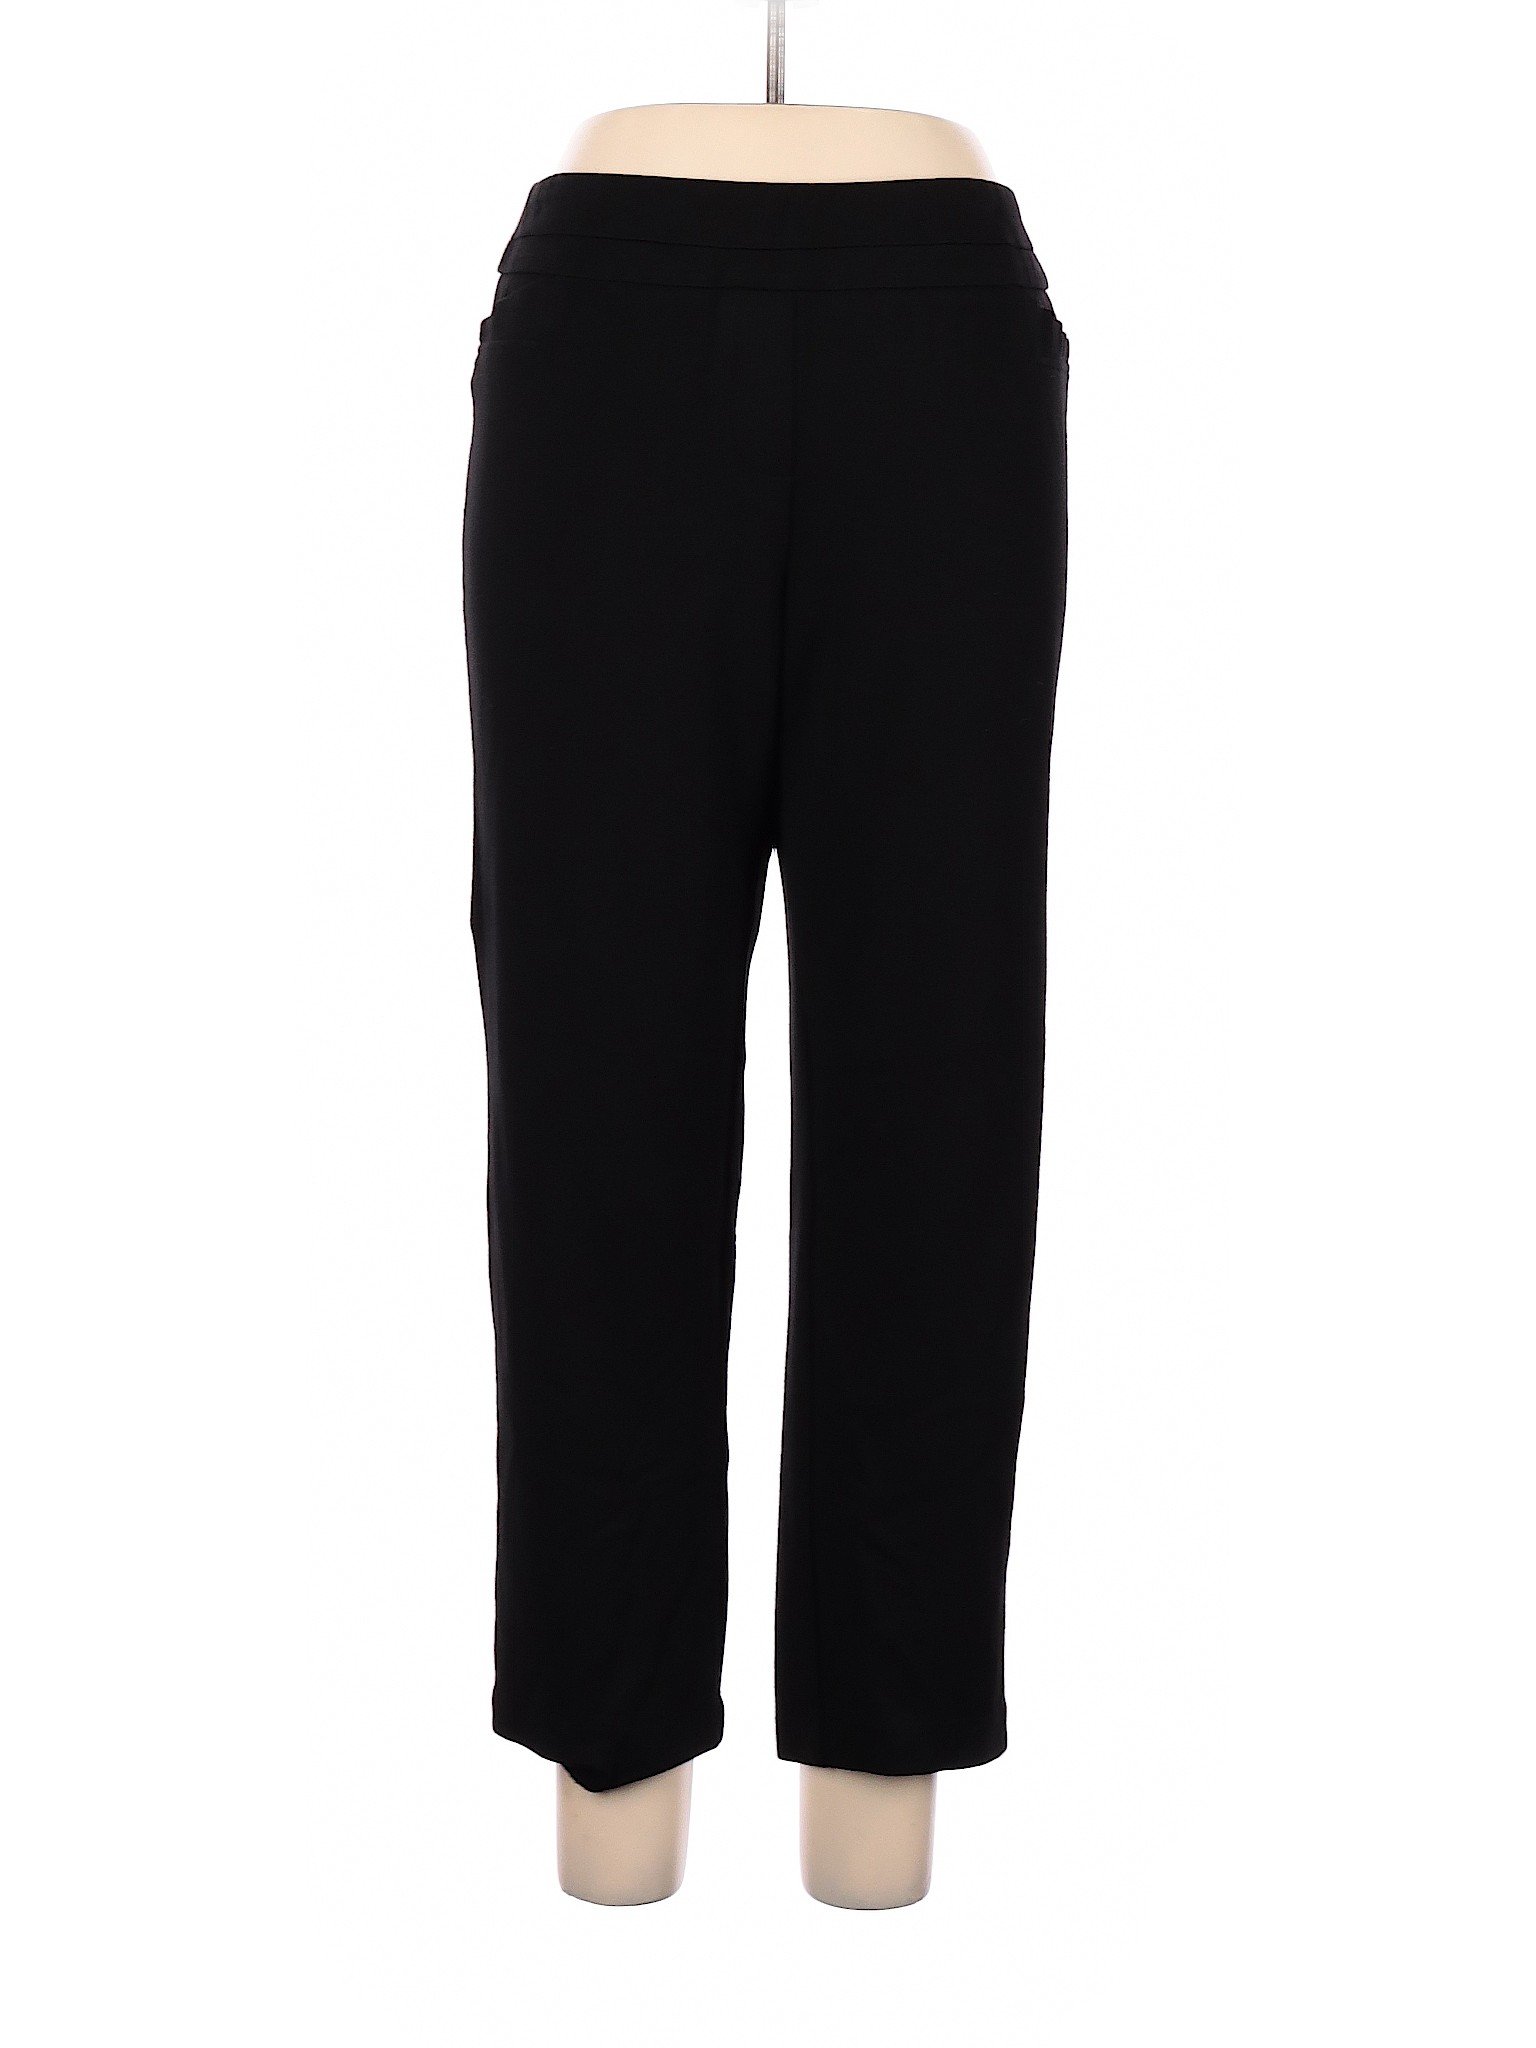 Zac & Rachel Women Black Casual Pants 1X Plus | eBay